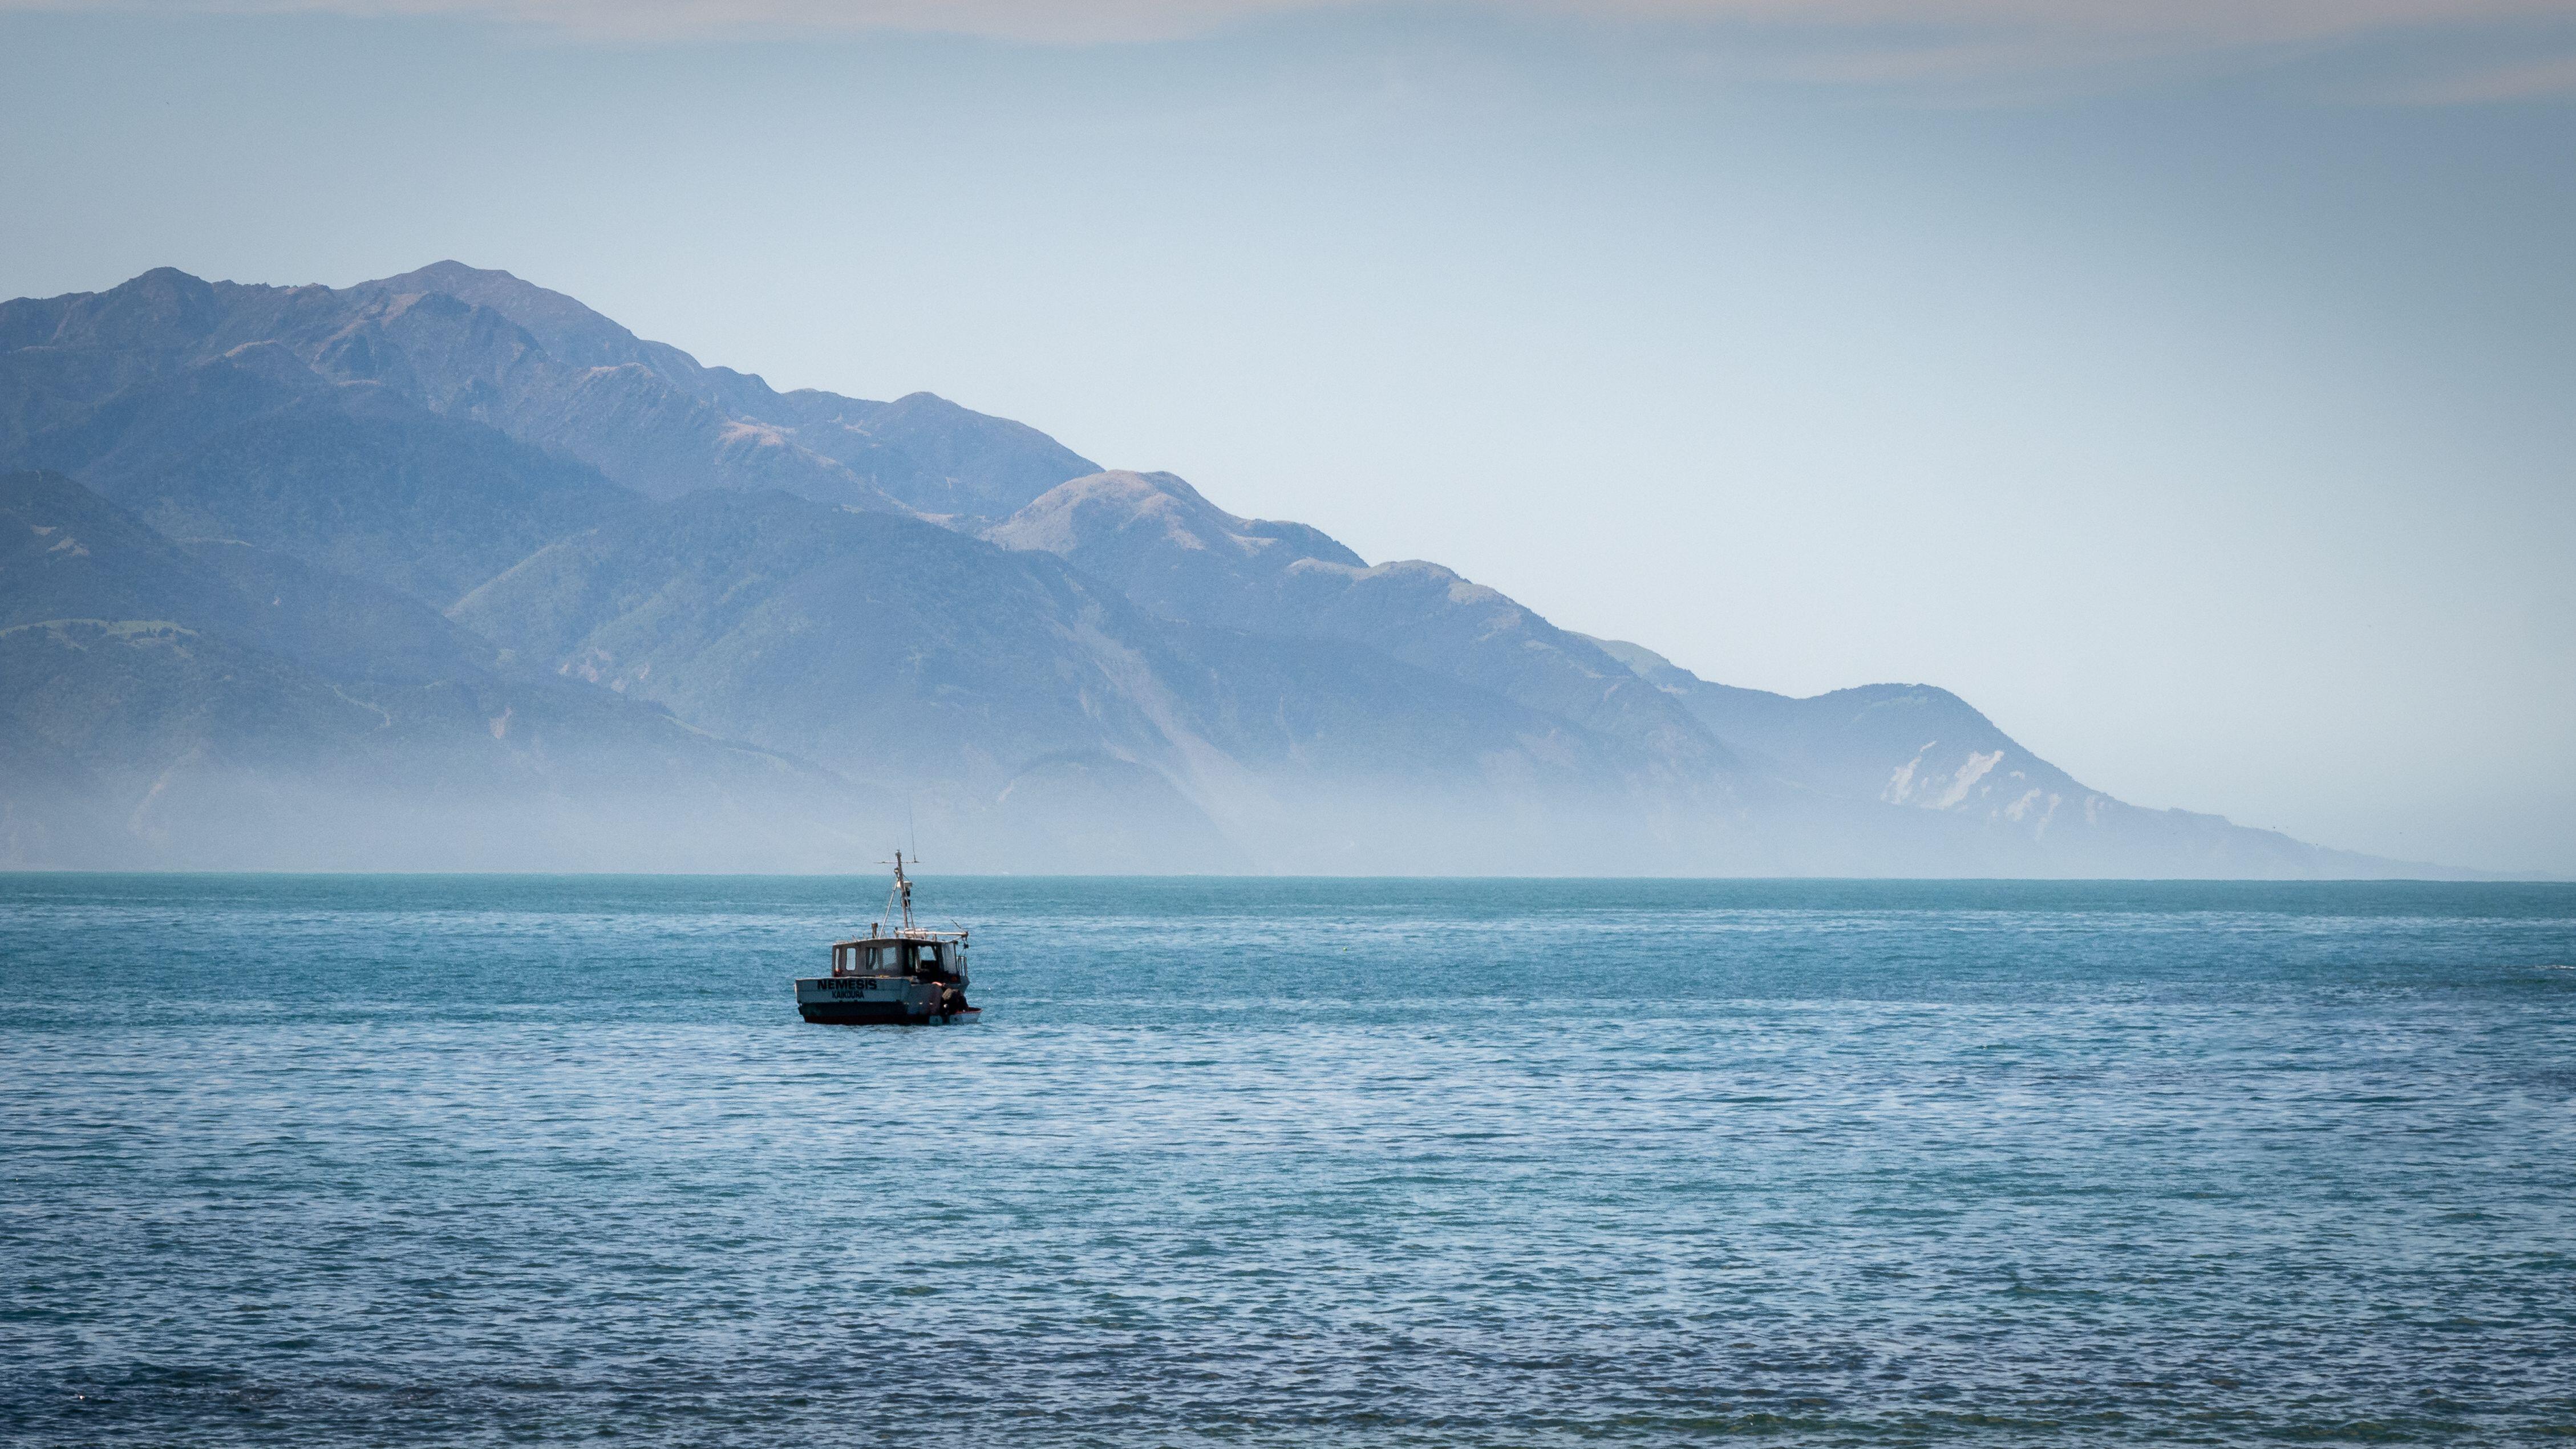 Boat on the ocean with mountain backdrop. Shot at Kaikoura peninsula, New Zealand